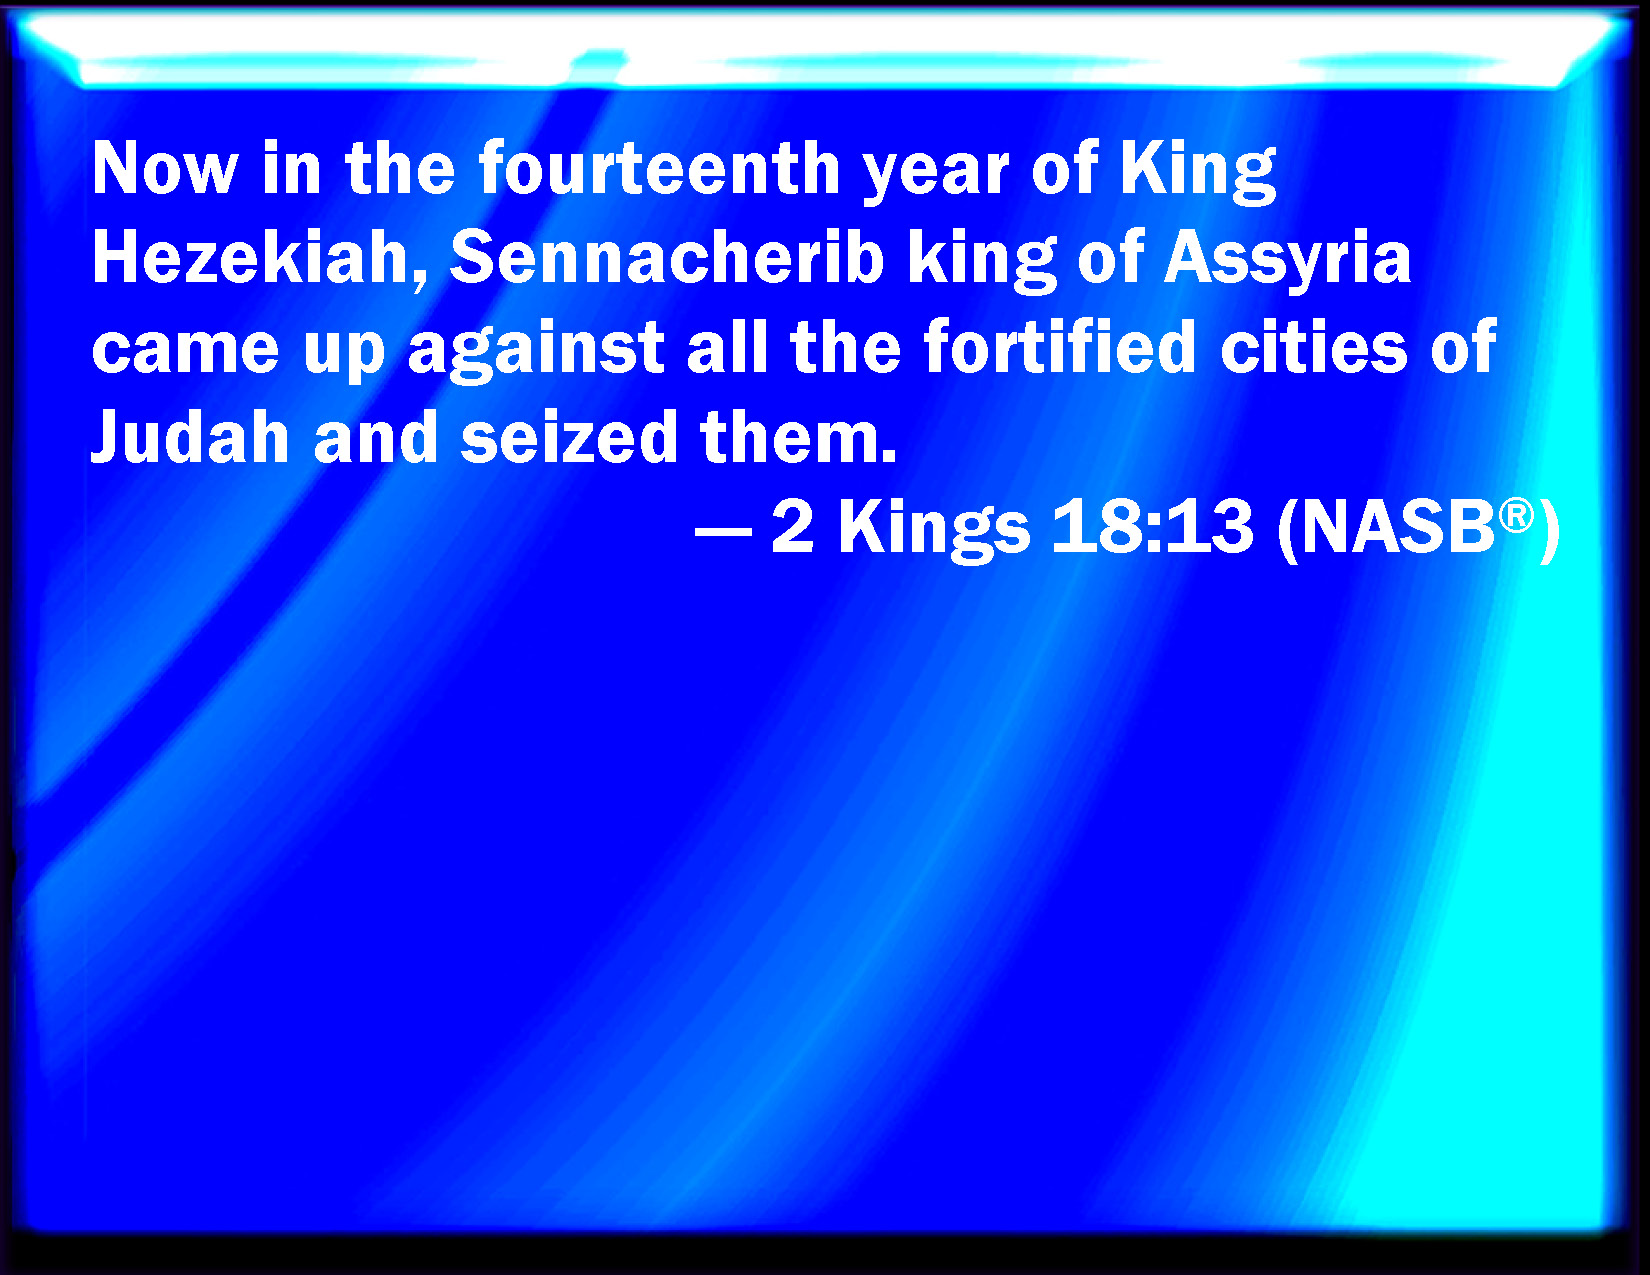 2 Kings 18 13 Now In The Fourteenth Year Of King Hezekiah Did